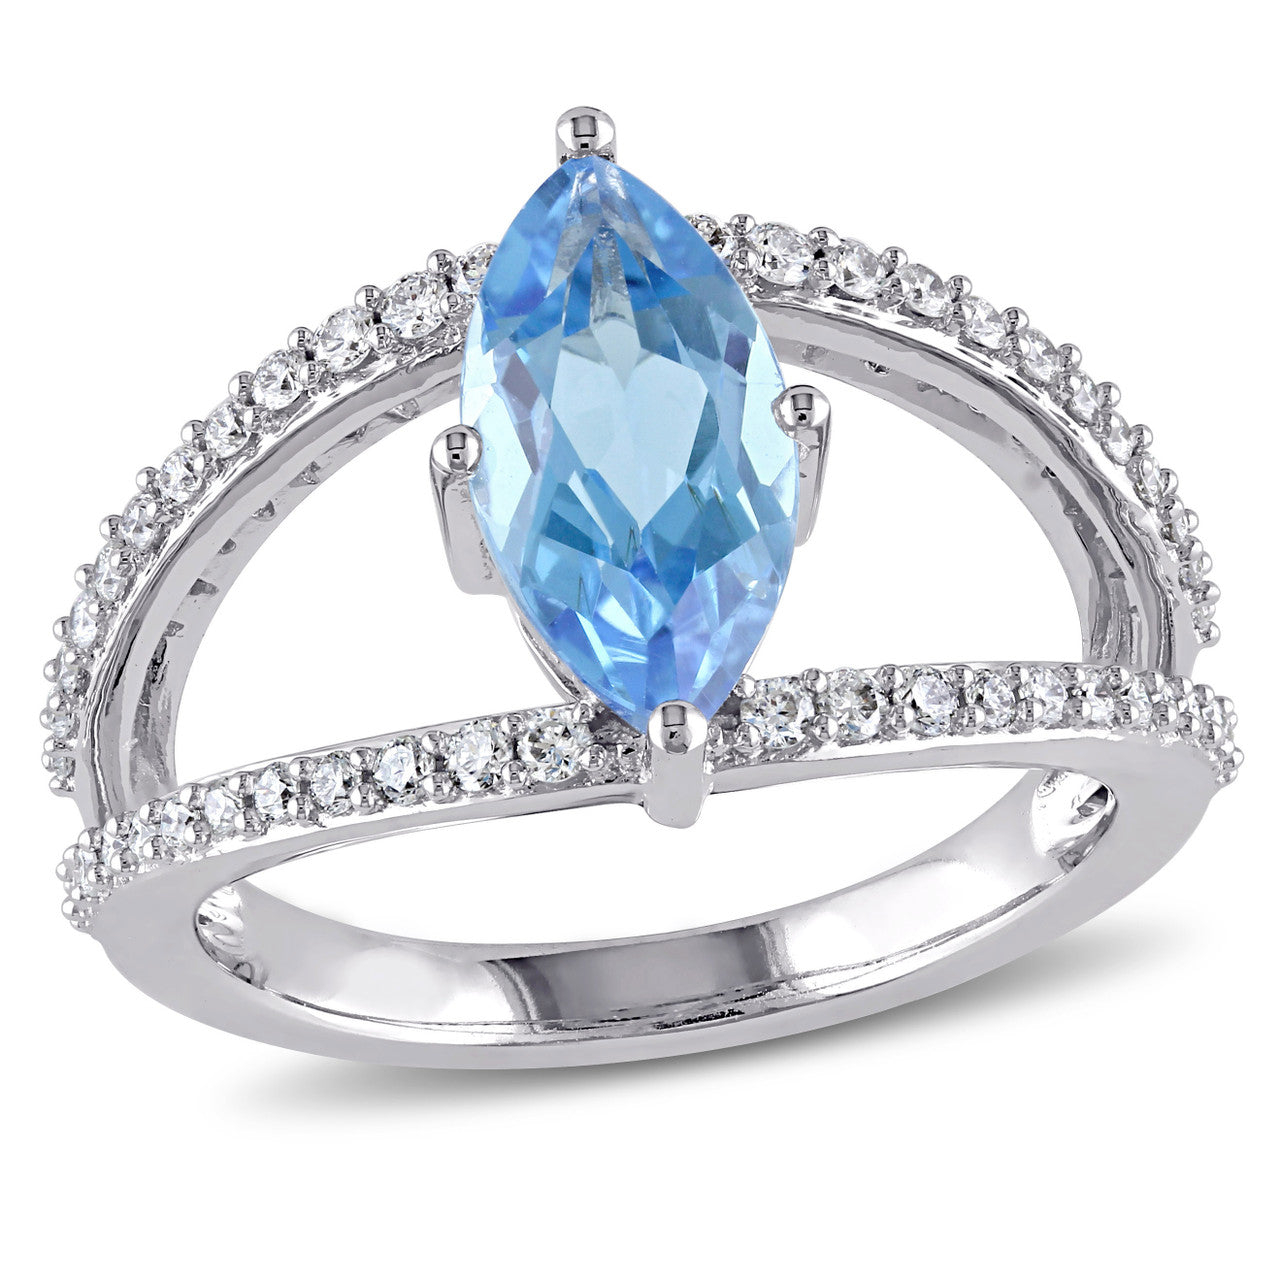 Julianna B Diamond & Swiss Blue Topaz Ring in 14k White Gold - 75000002217 | Ice Jewellery Australia